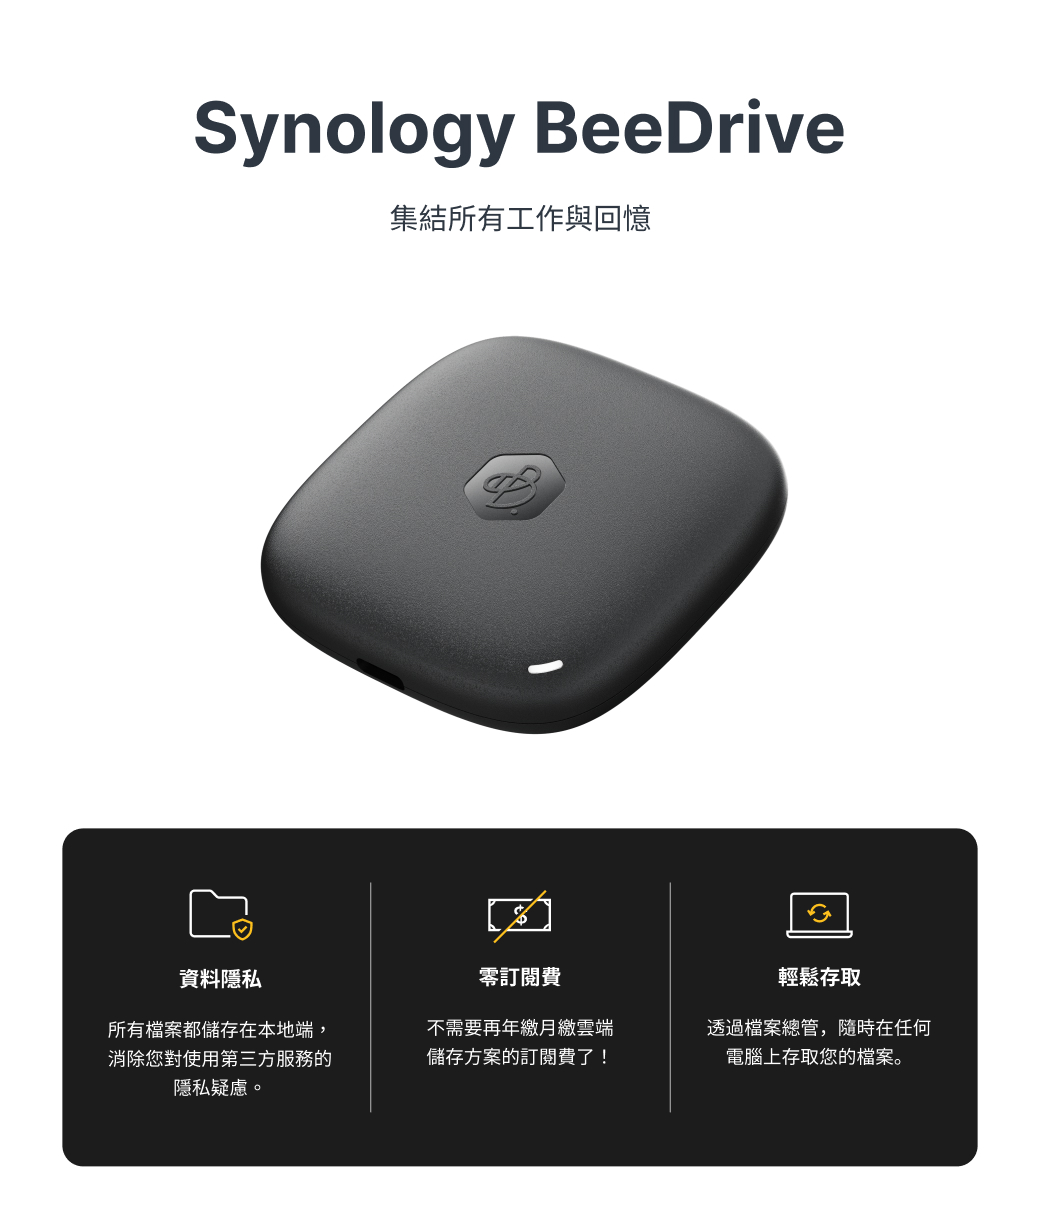 Synology BeeDrive集結所有工作與回憶資料隱私所有檔案都儲存在本地端,消除您對使用第三方服務的隱私疑慮。零訂閱費不需要再年繳月繳雲端儲存方案的訂閱費了!輕鬆存取透過檔案總管,隨時在任何電腦上存取您的檔案。